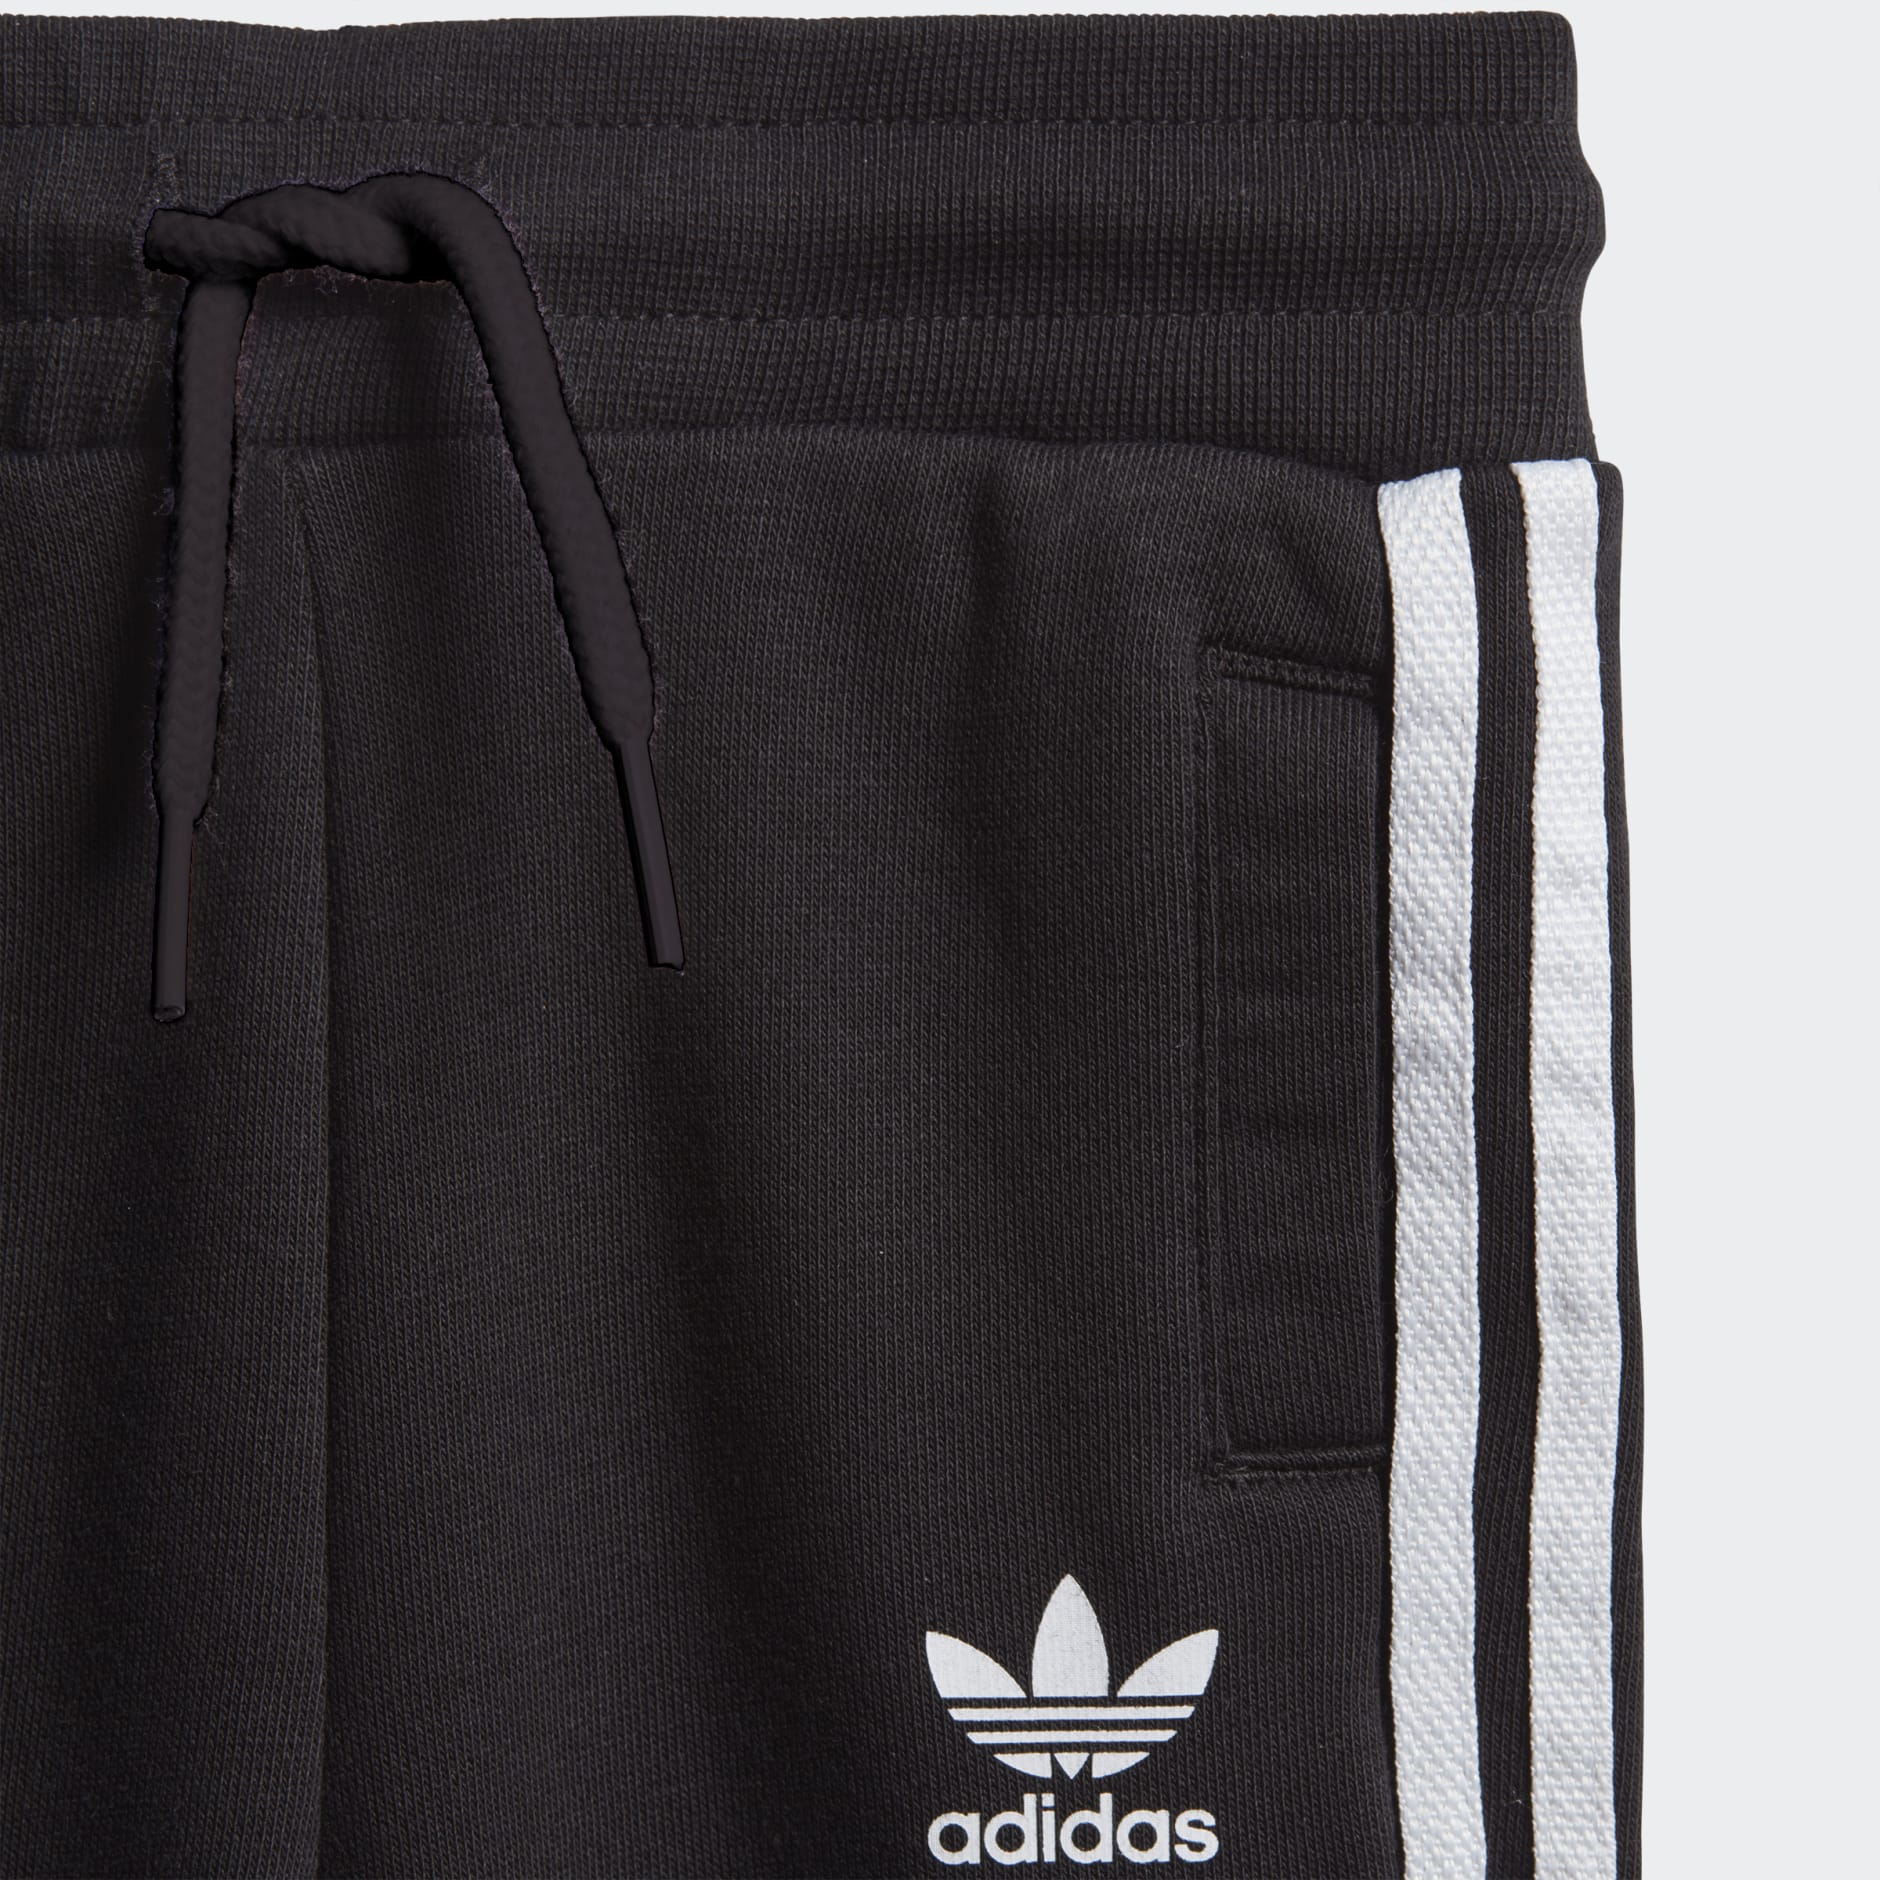 Clothing - Crew Sweatshirt Set - Black | adidas South Africa